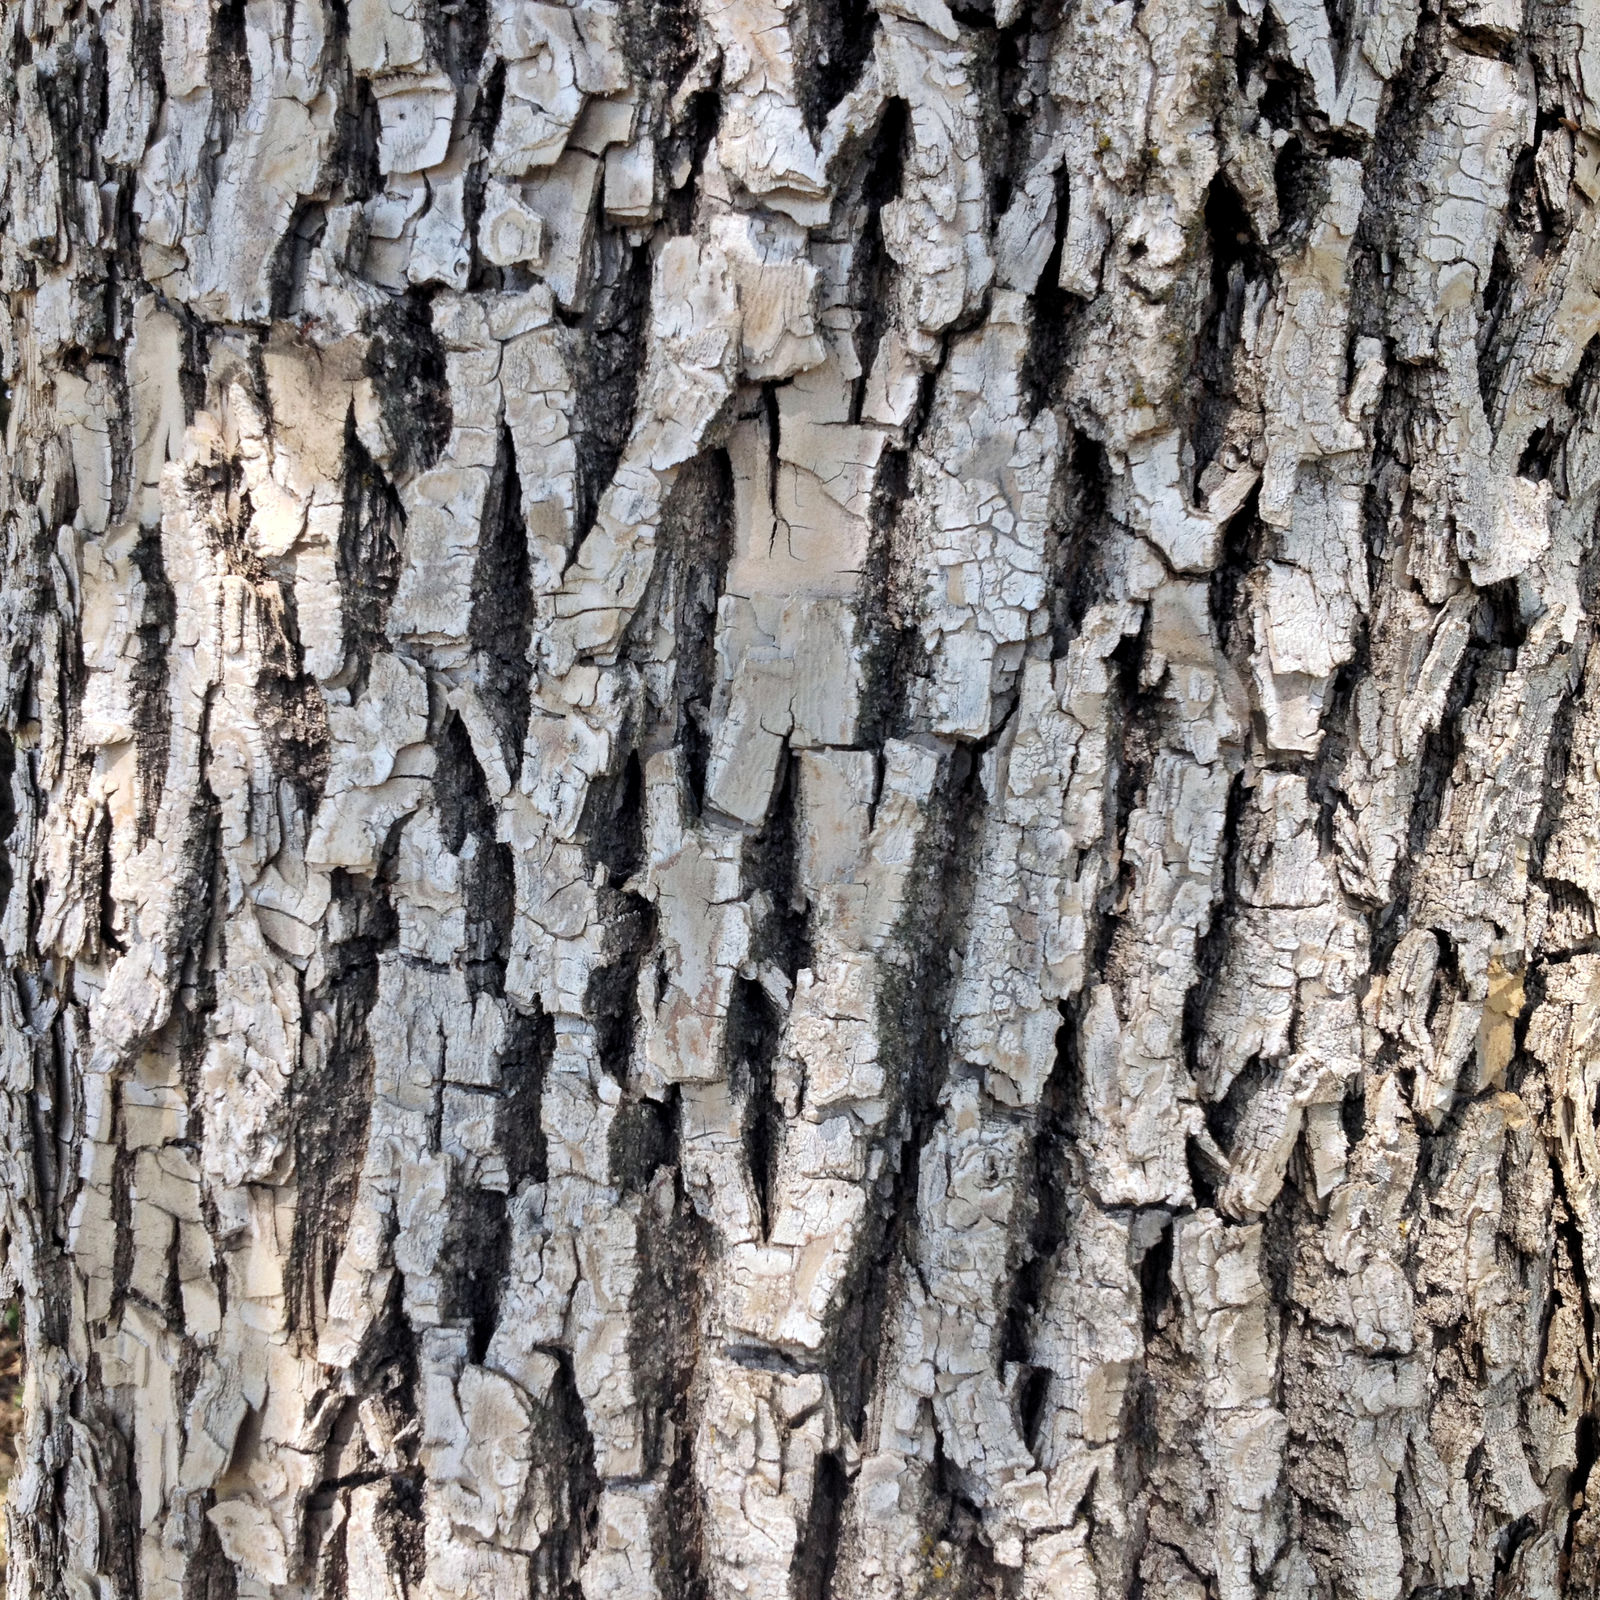 Rough Tree Bark 5048 w/ tiling versions